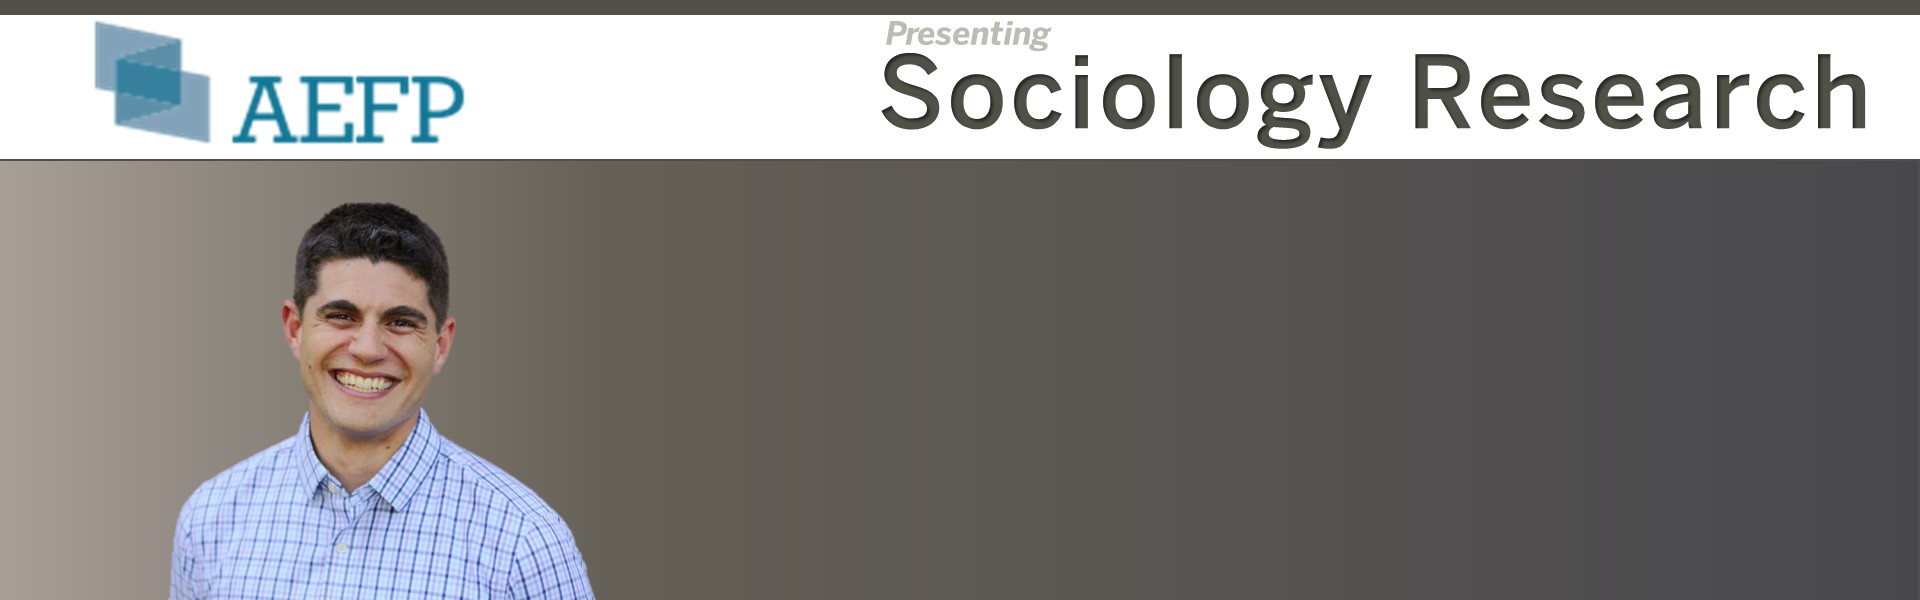 Presenting Sociology research: Patrick Denice at AEFP 2019